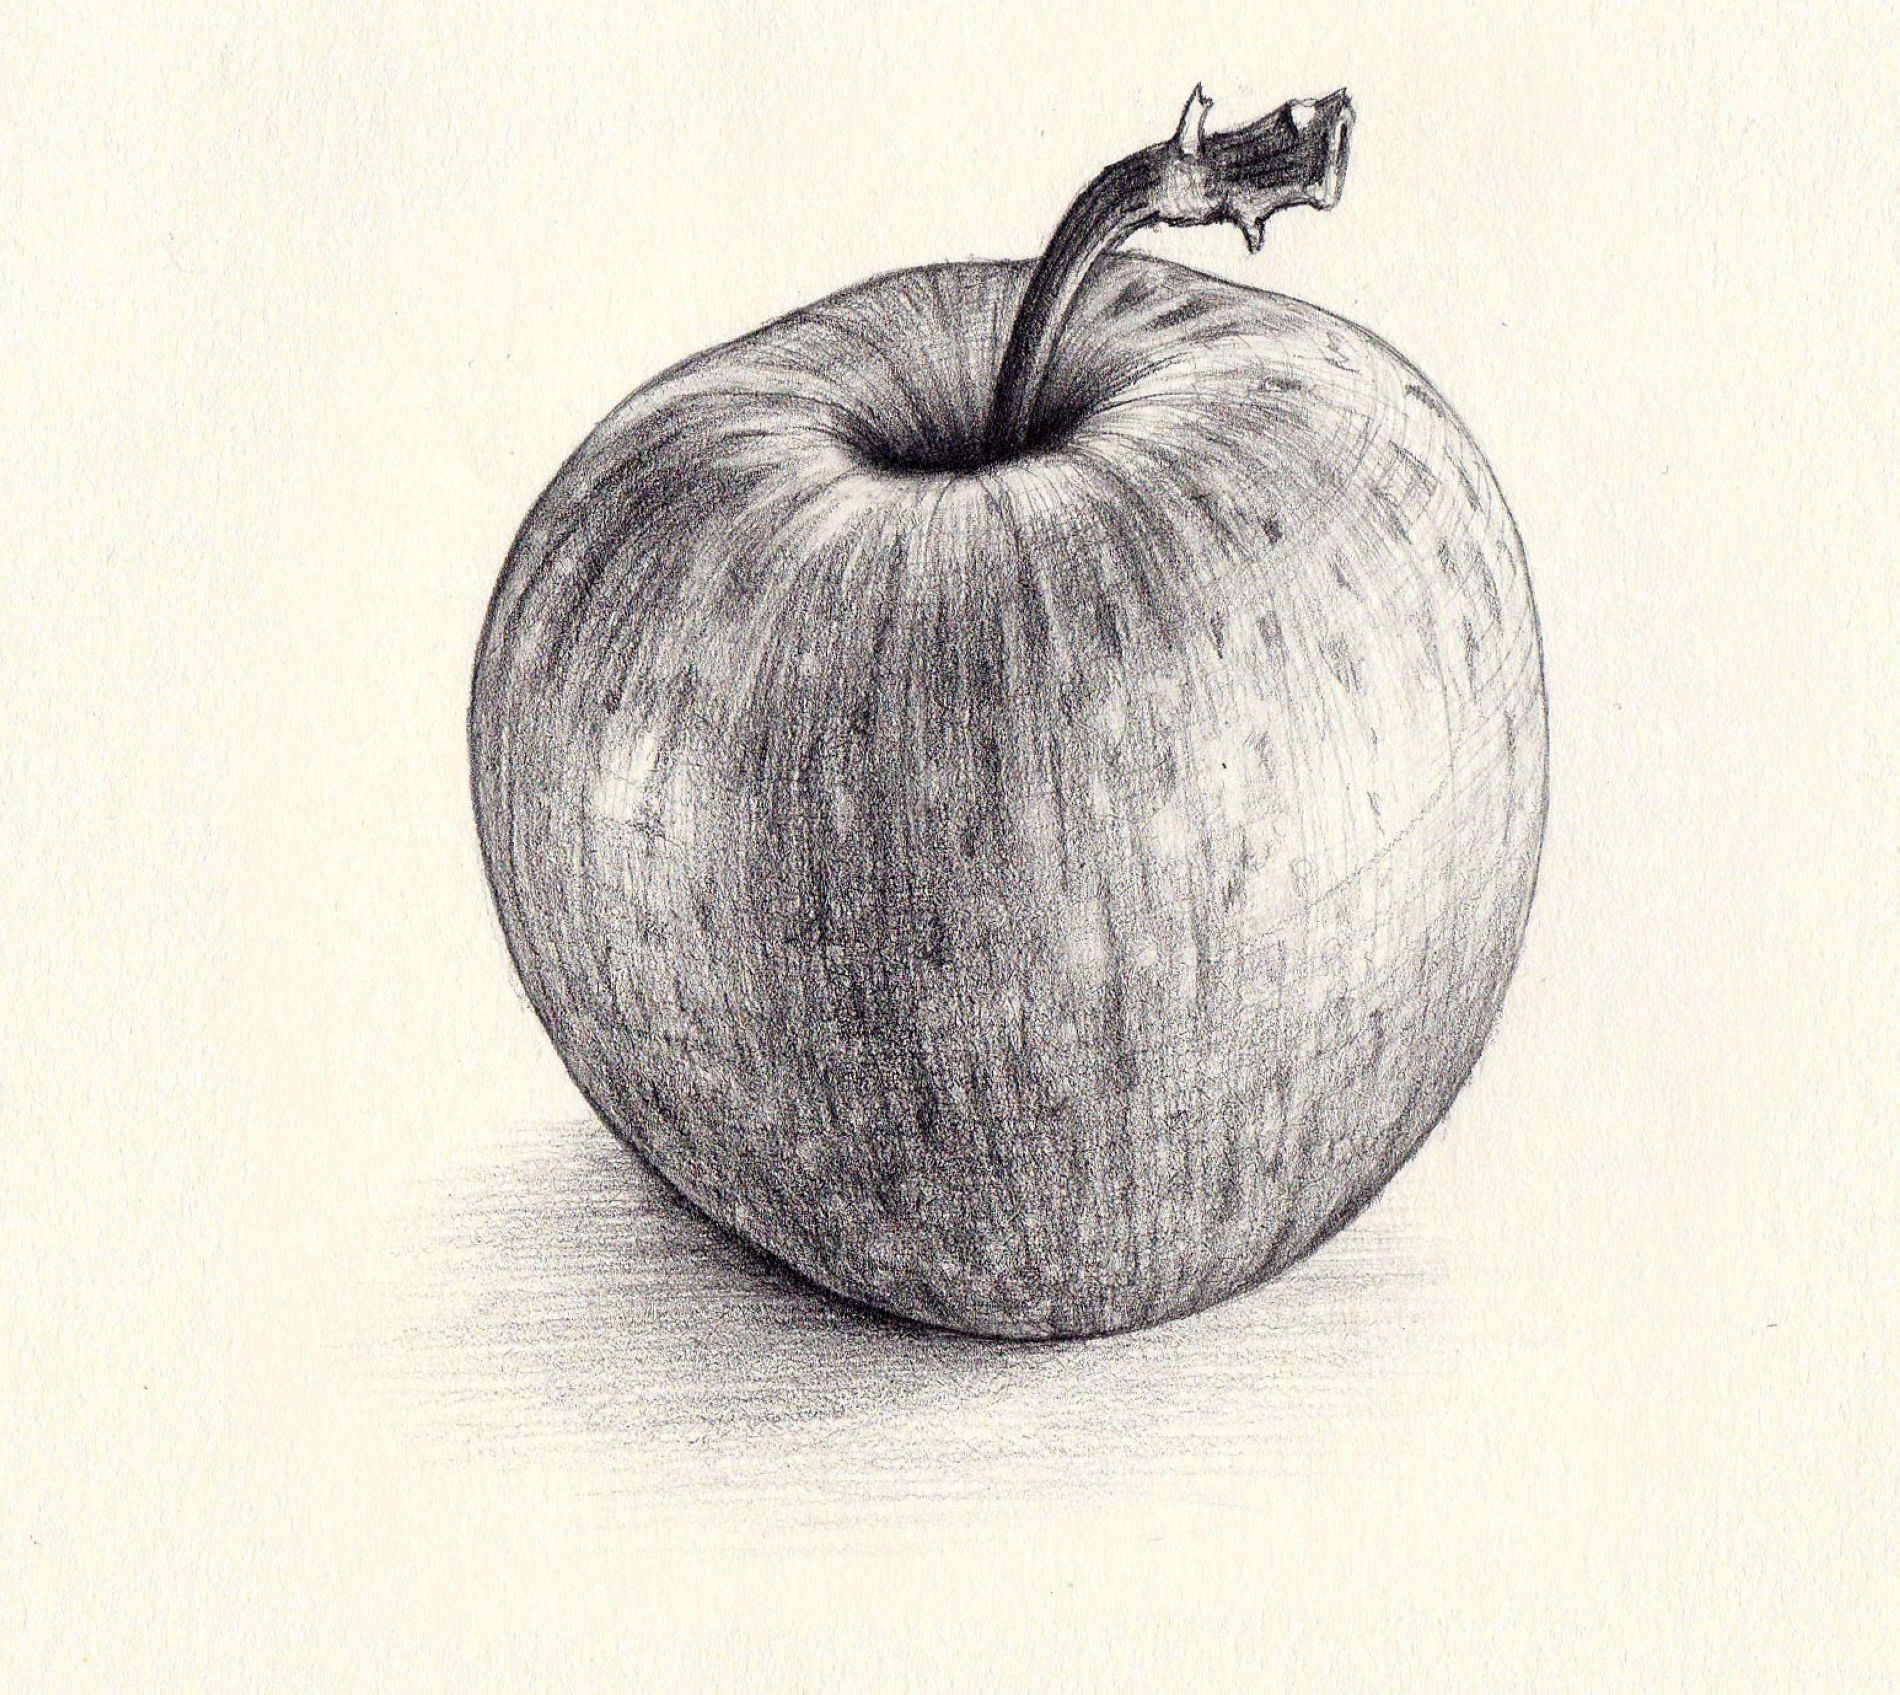 Яблоня карандашом. Яблоко рисунок карандашом. Яблоко натюрморт карандашом. Набросок яблока карандашом. Яблоко с тенью рисунок.